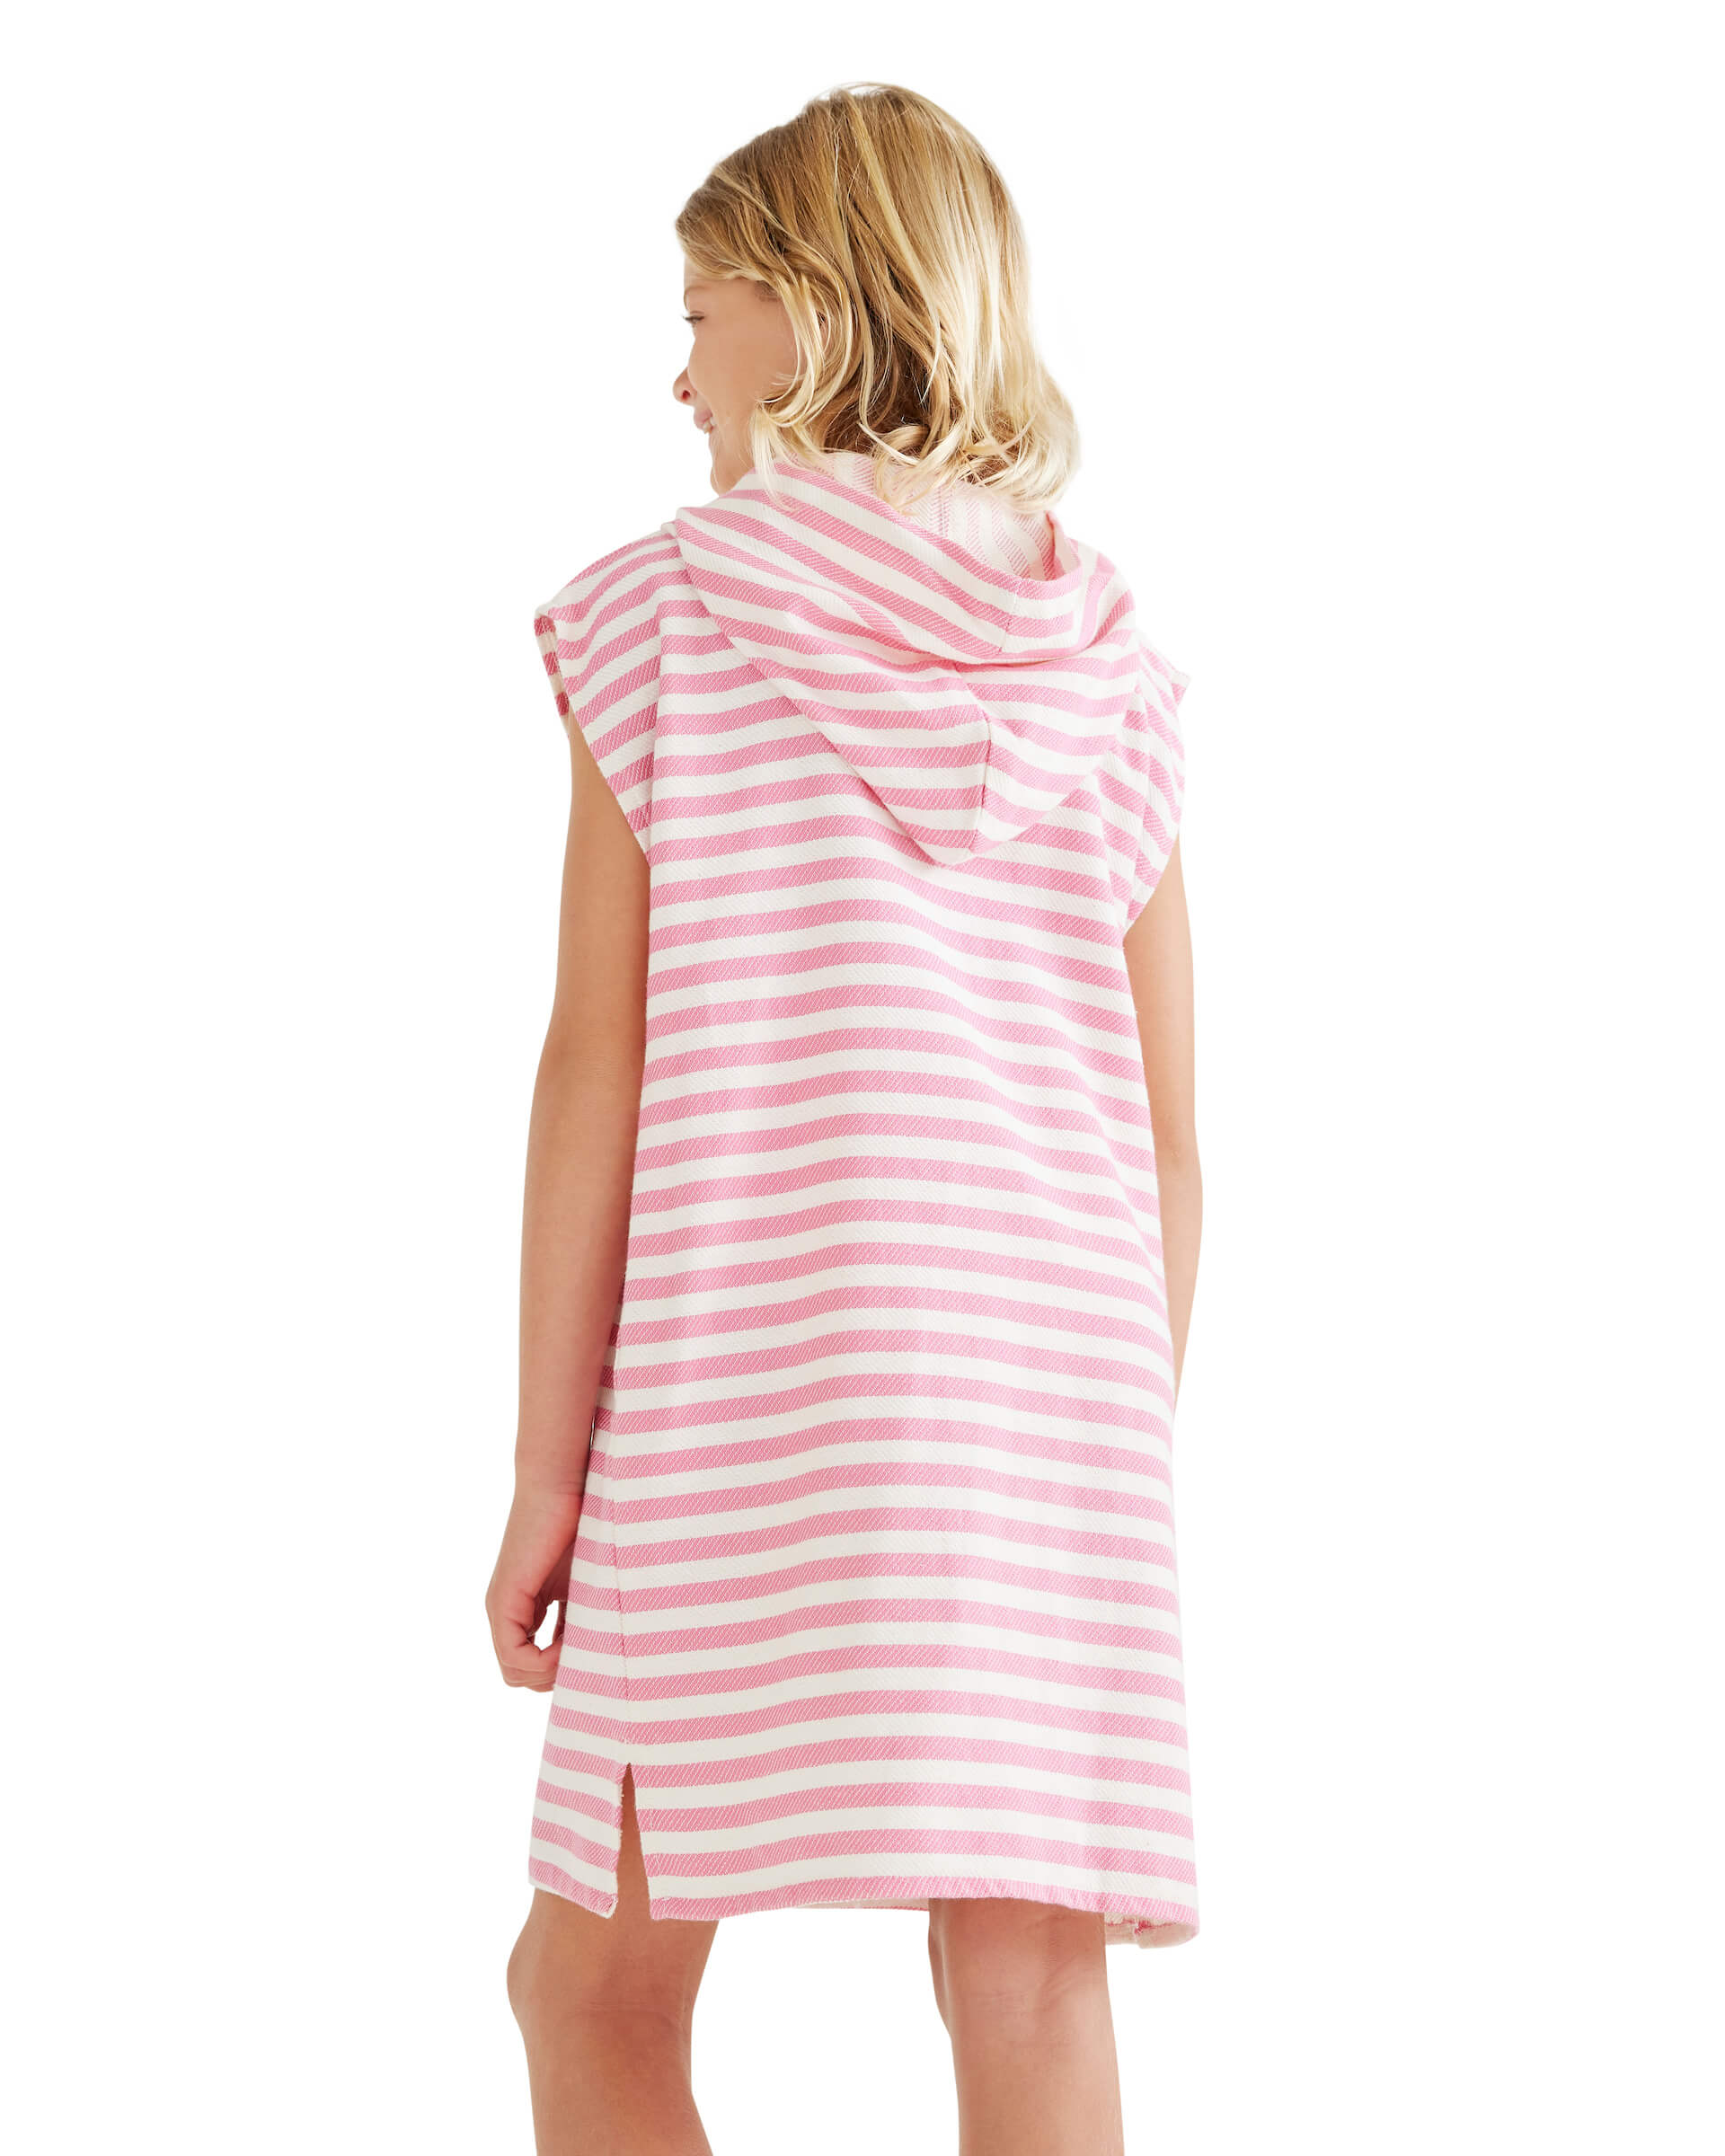 AMALFI Kids Sleeveless Hooded Towel: Hot Pink/White